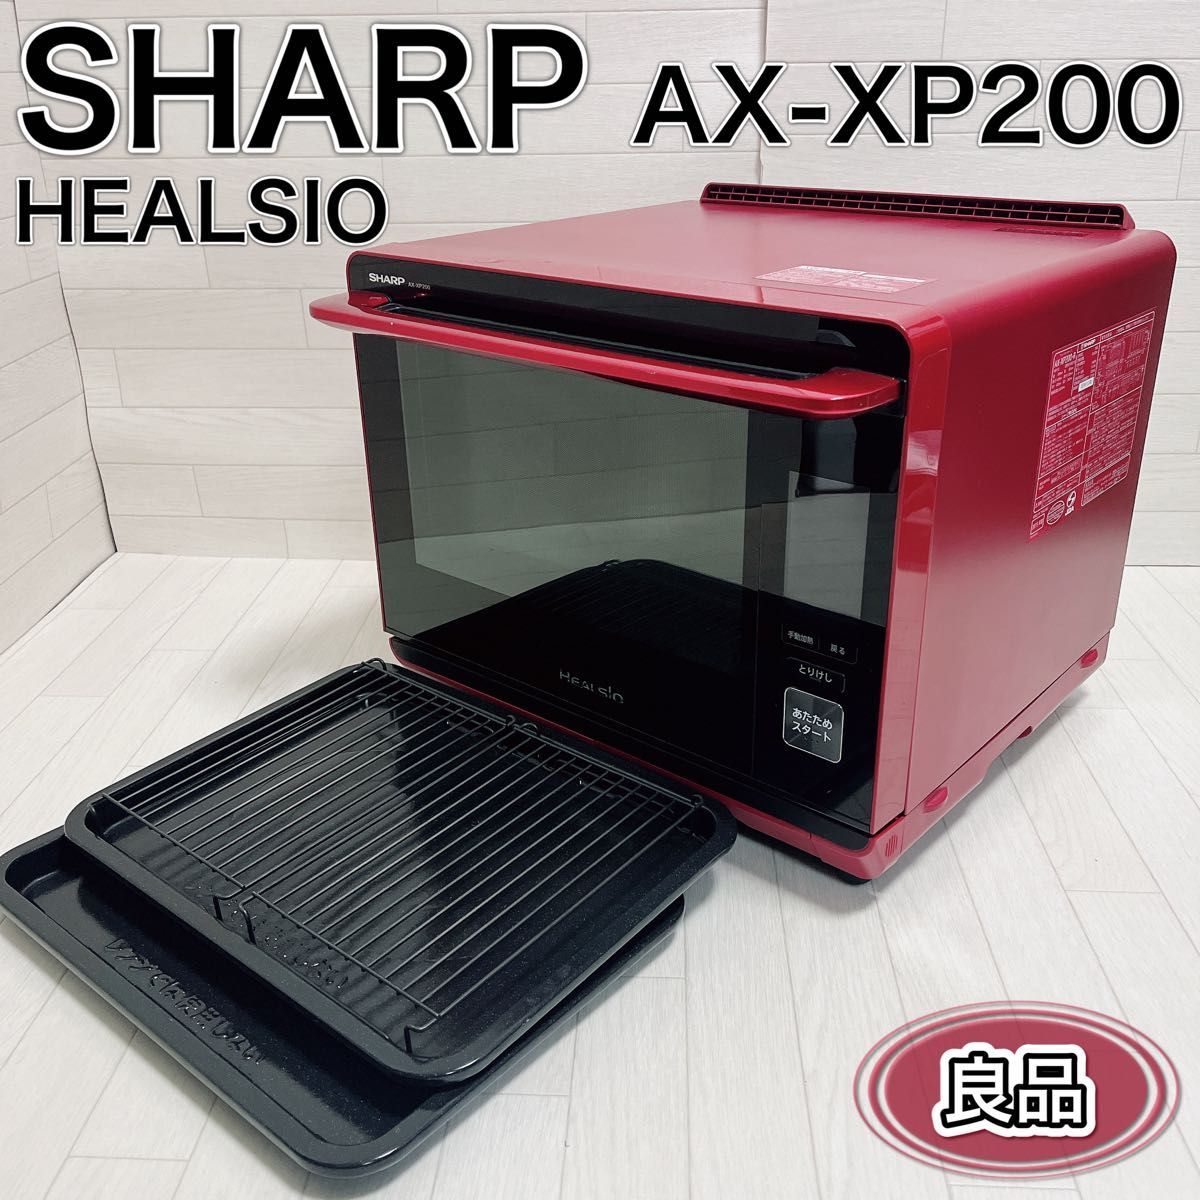 SHARP AX-XP200 ウォーターオーブン ヘルシオ スチームオーブン